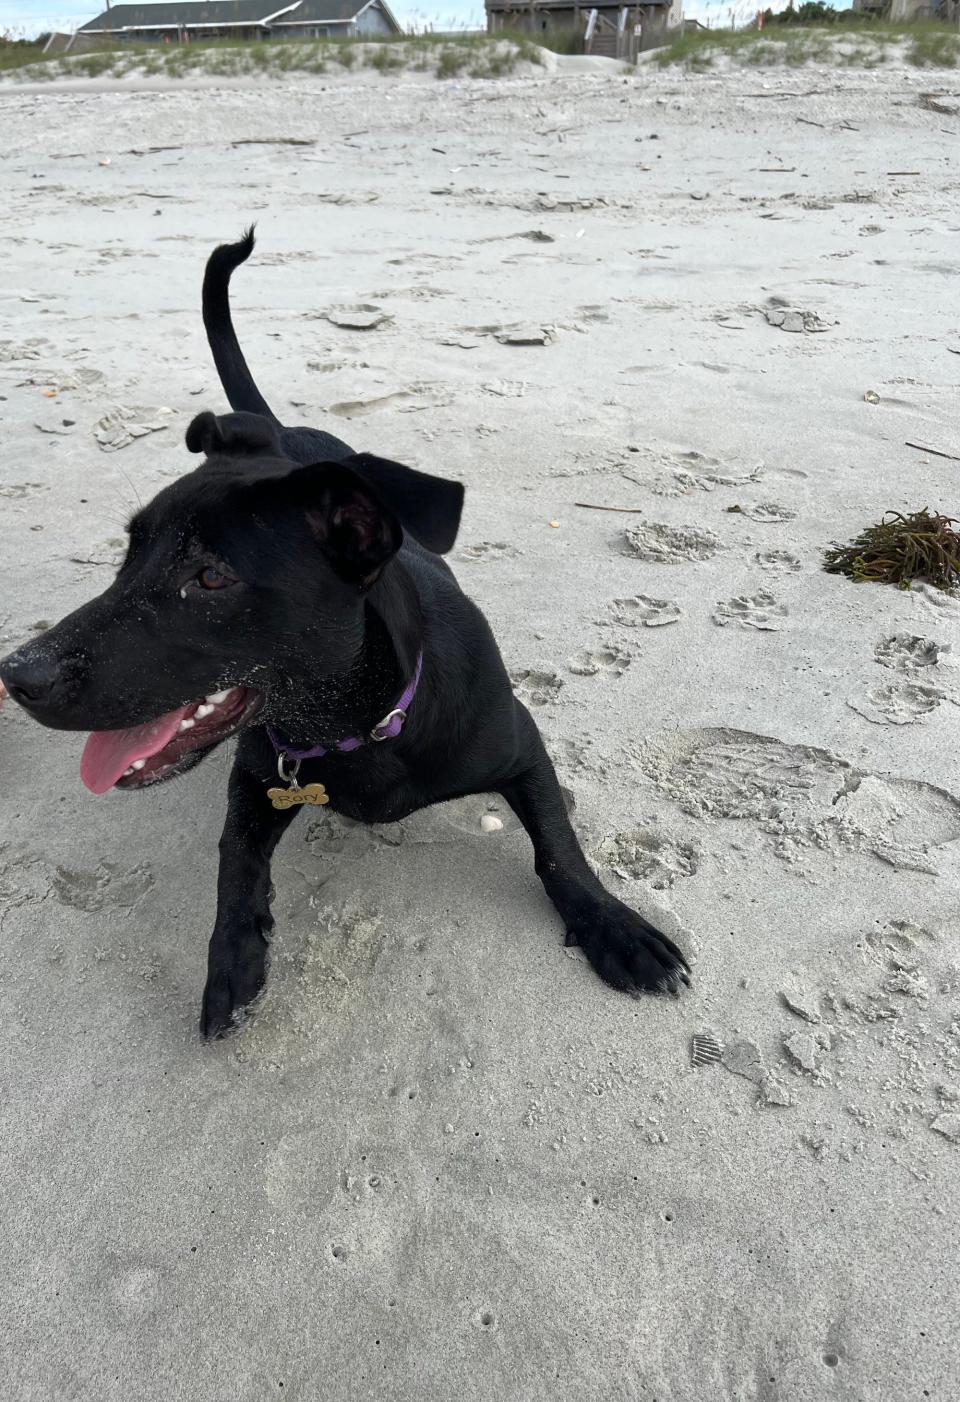 A black dog runs around on a beach.